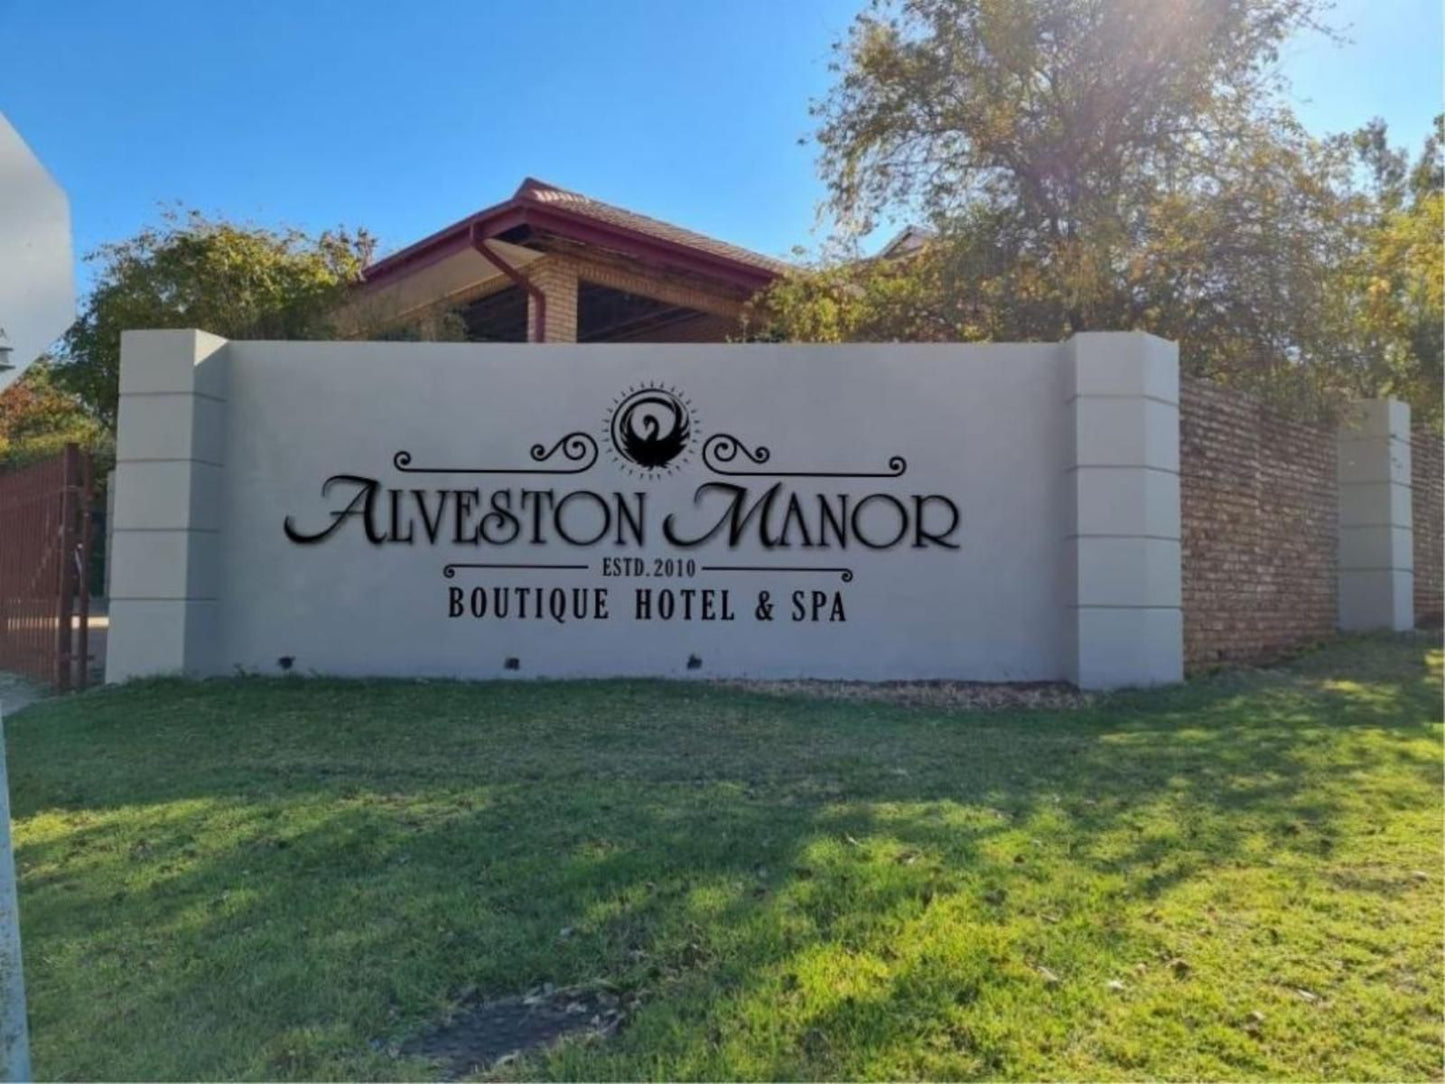 Alveston Manor Guest House Middelburg Mpumalanga Mpumalanga South Africa Sign